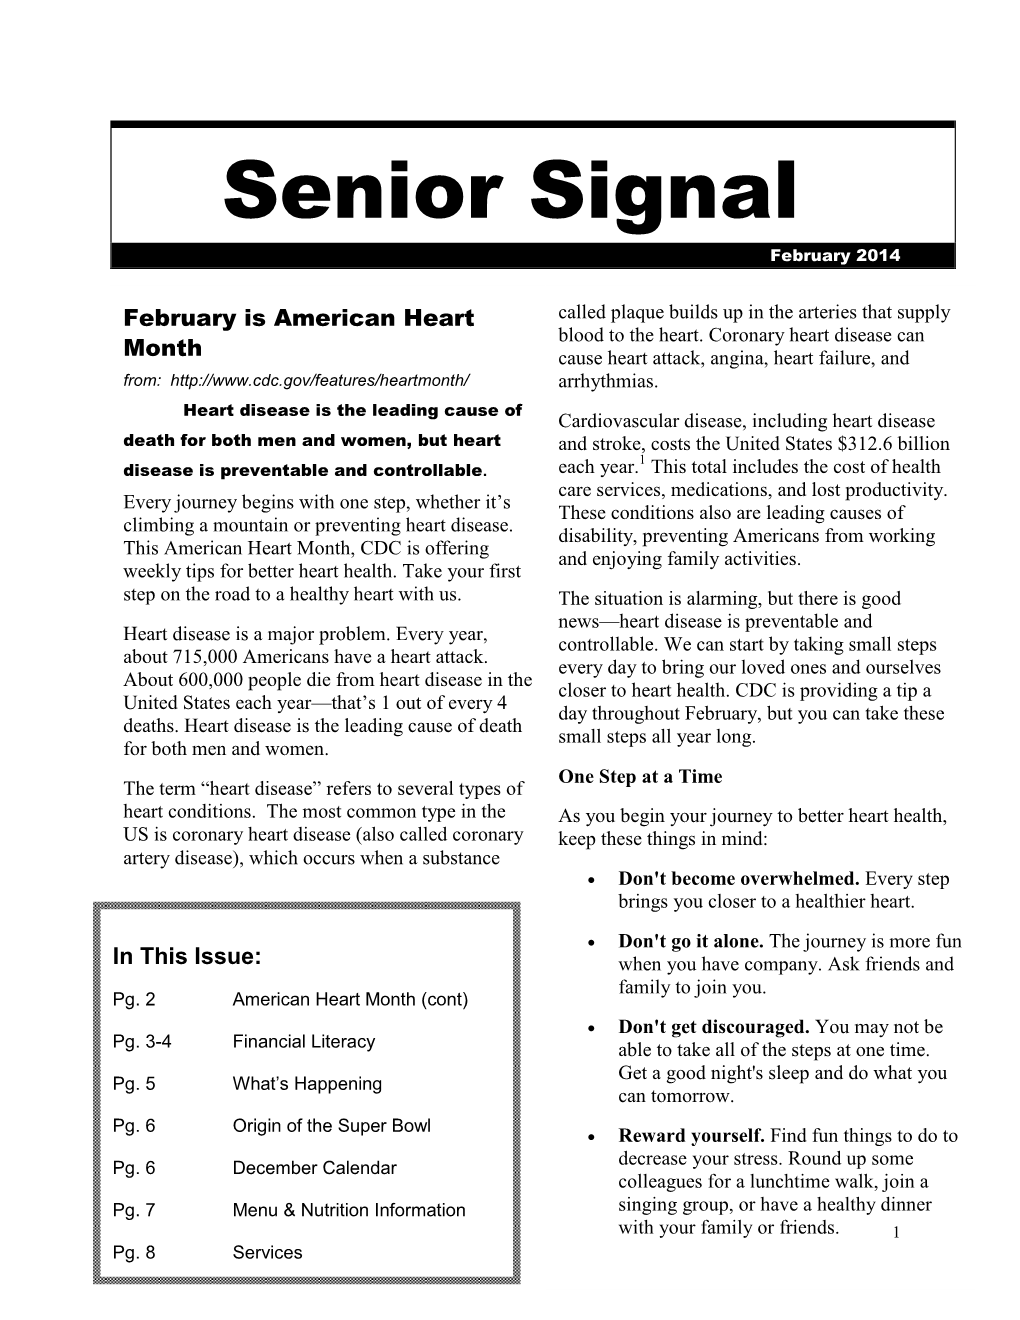 Senior Signal February 2014